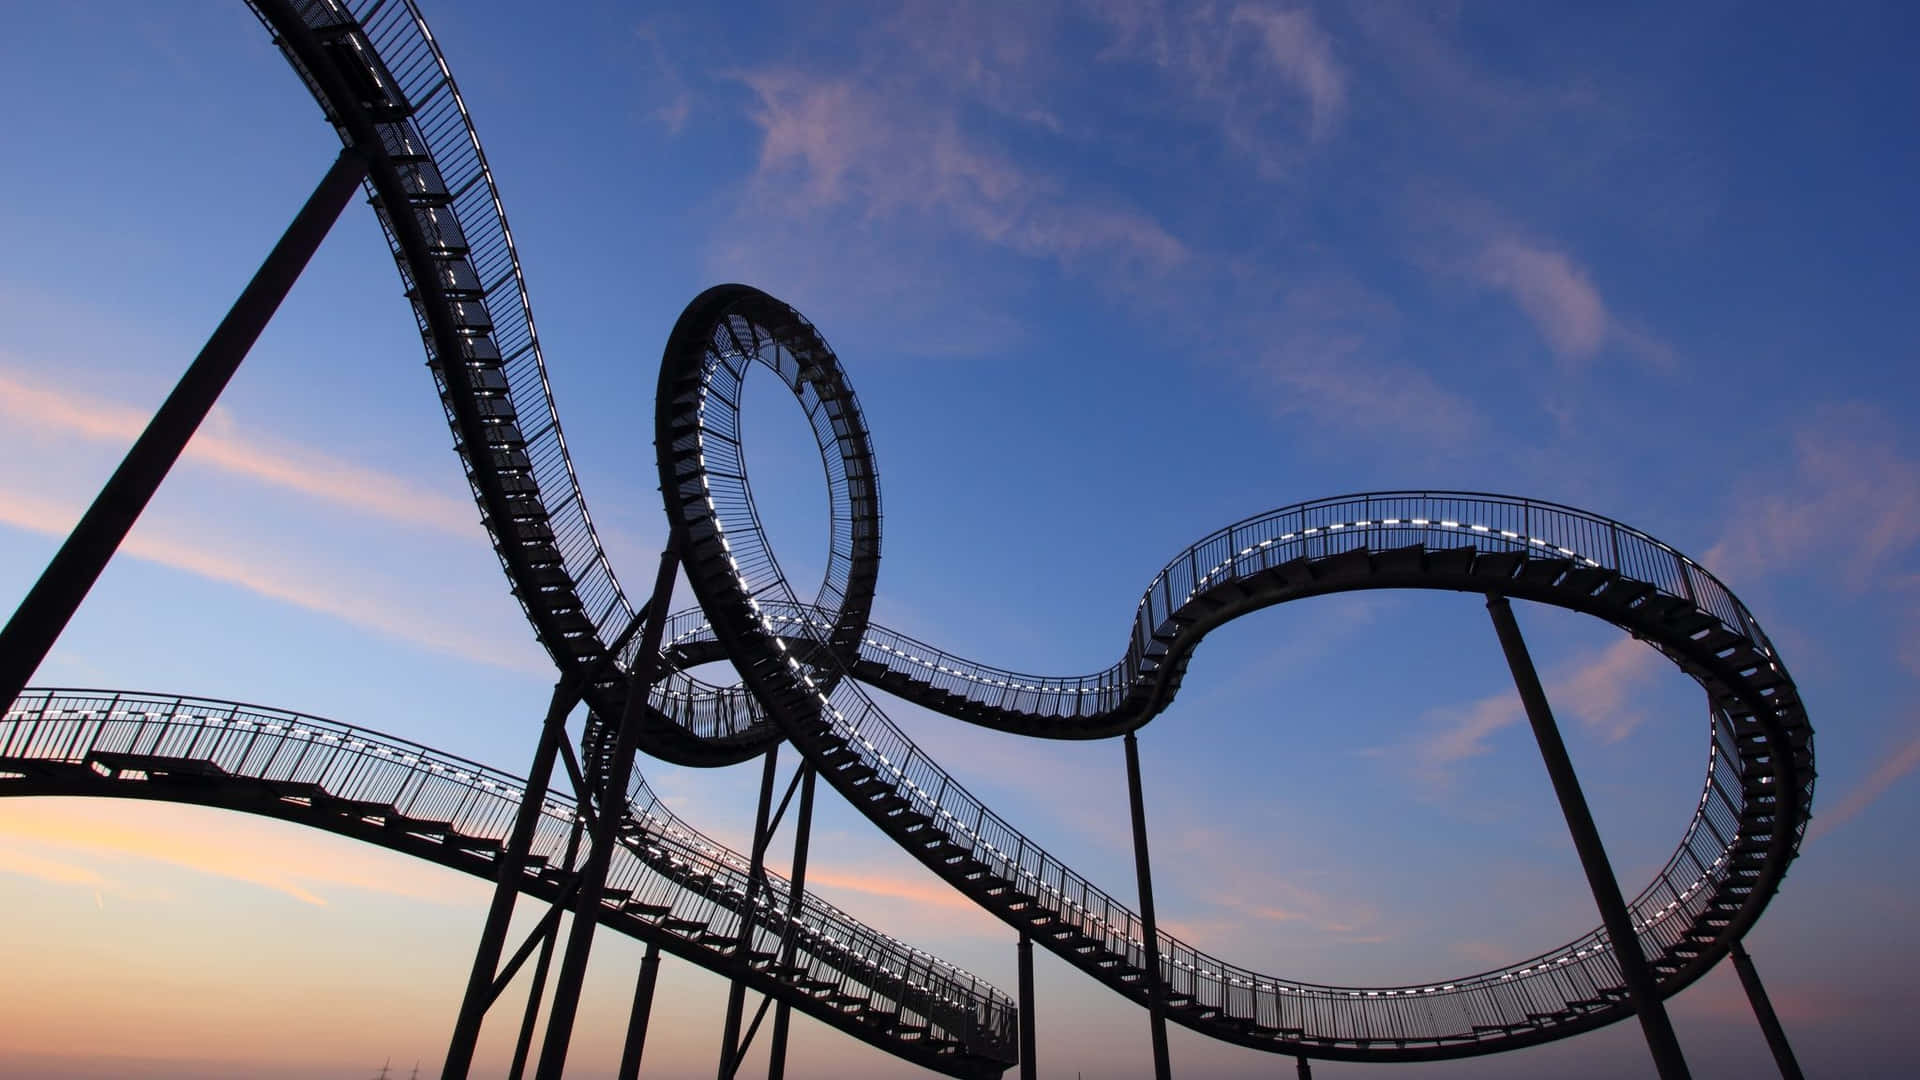 Caption: "Thrilling Adventure: Roller Coaster at its Peak"